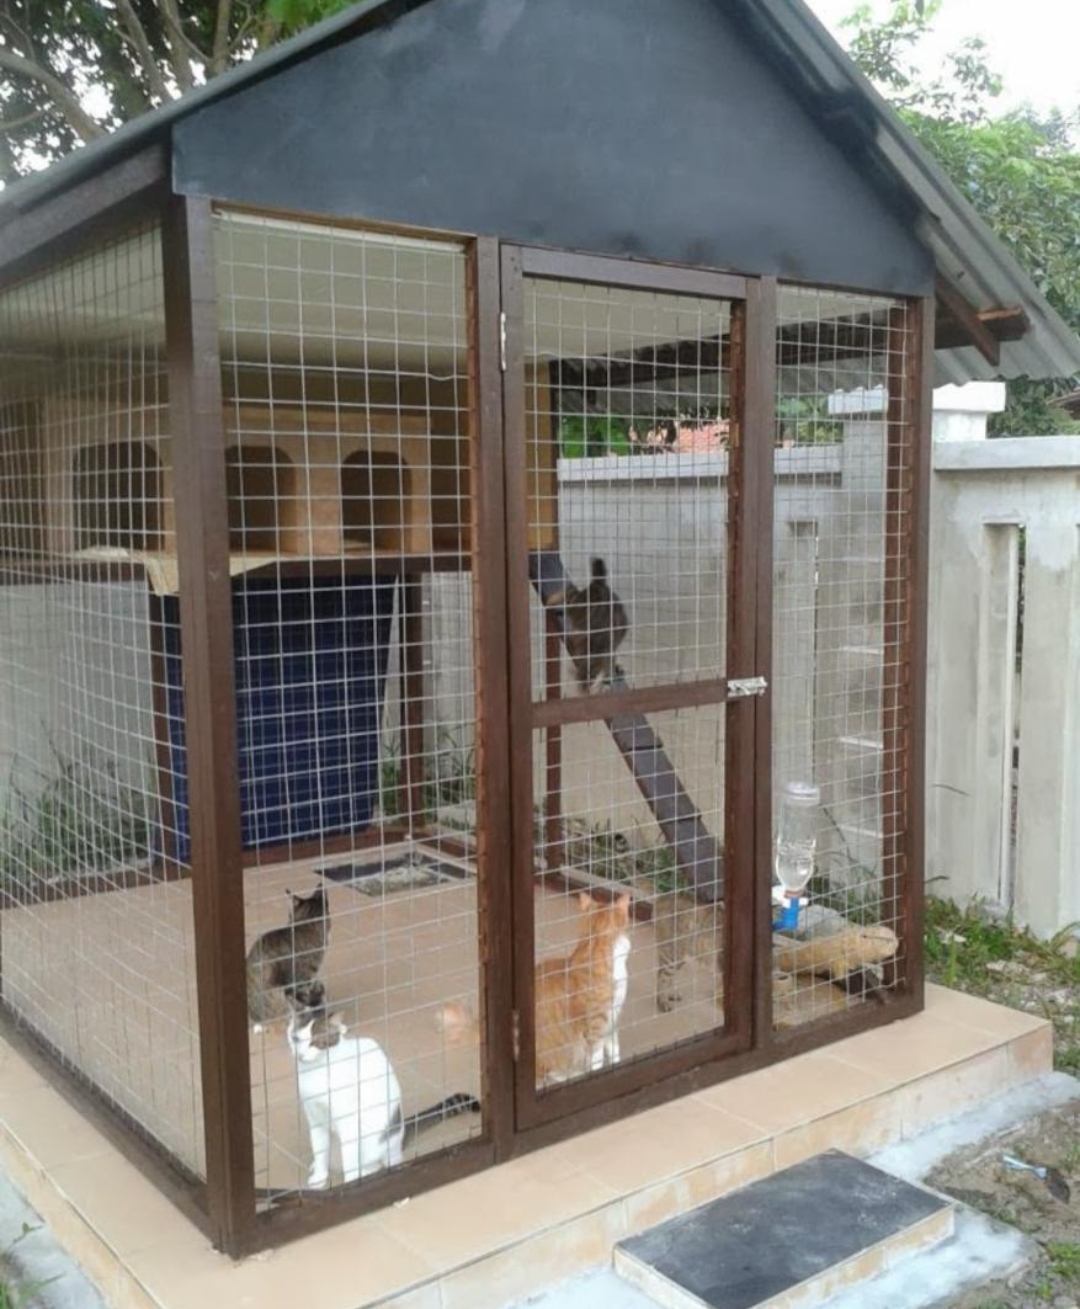  Contoh Rumah Kucing  Outdoor Home Desaign